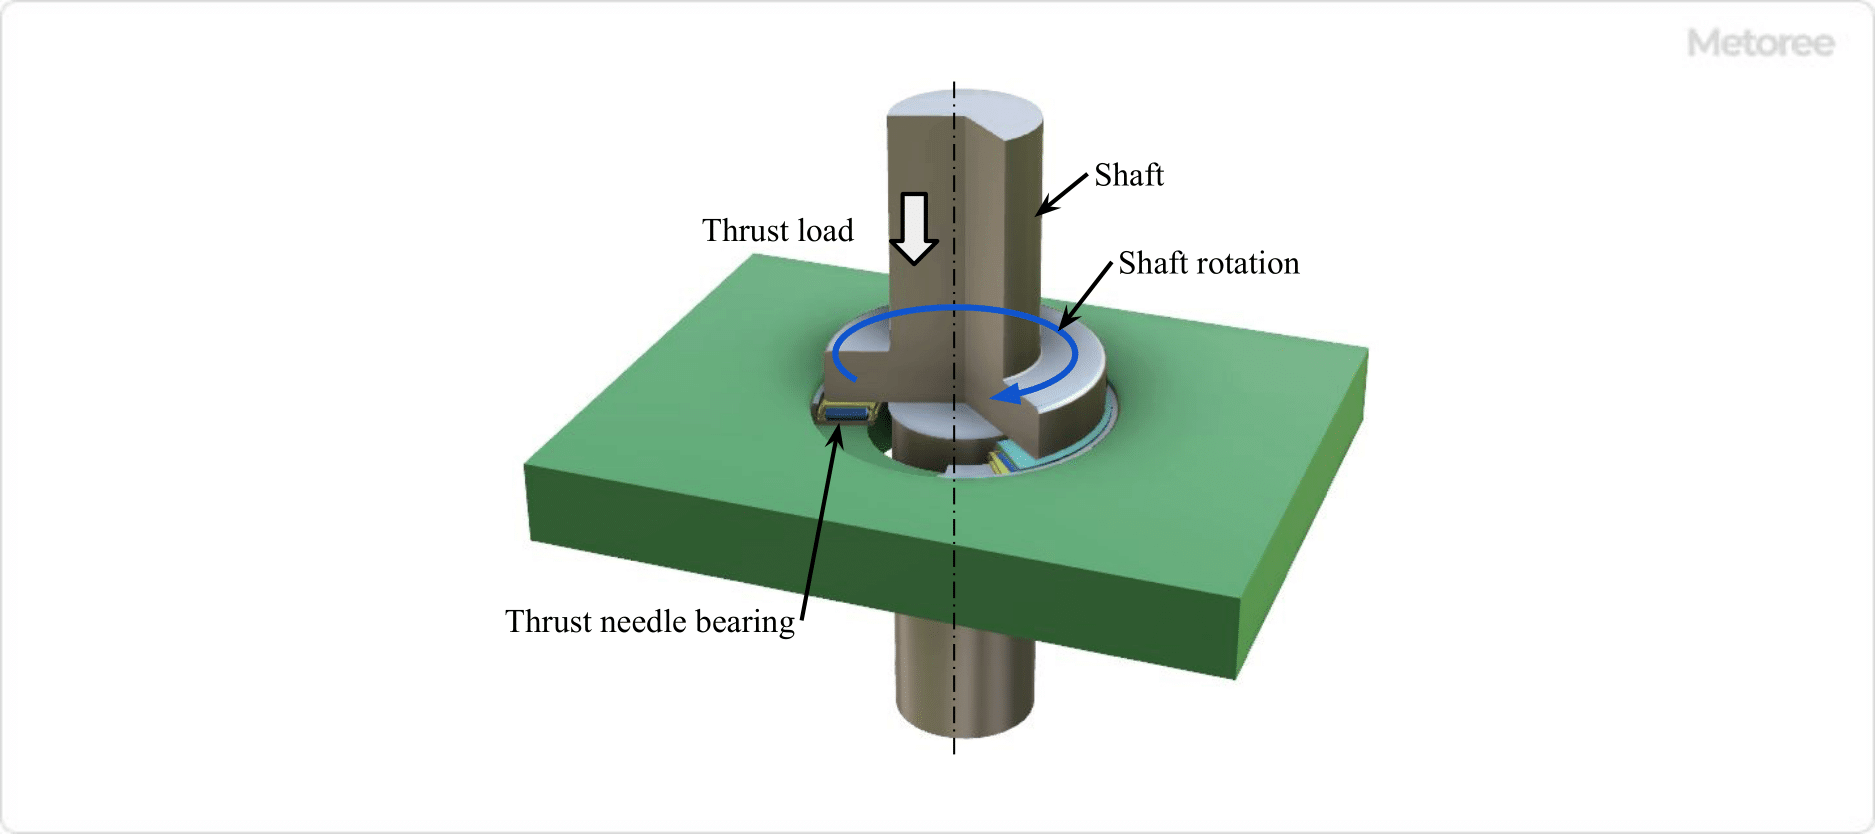 Figure 1. Thrust needle bearing and thrust load